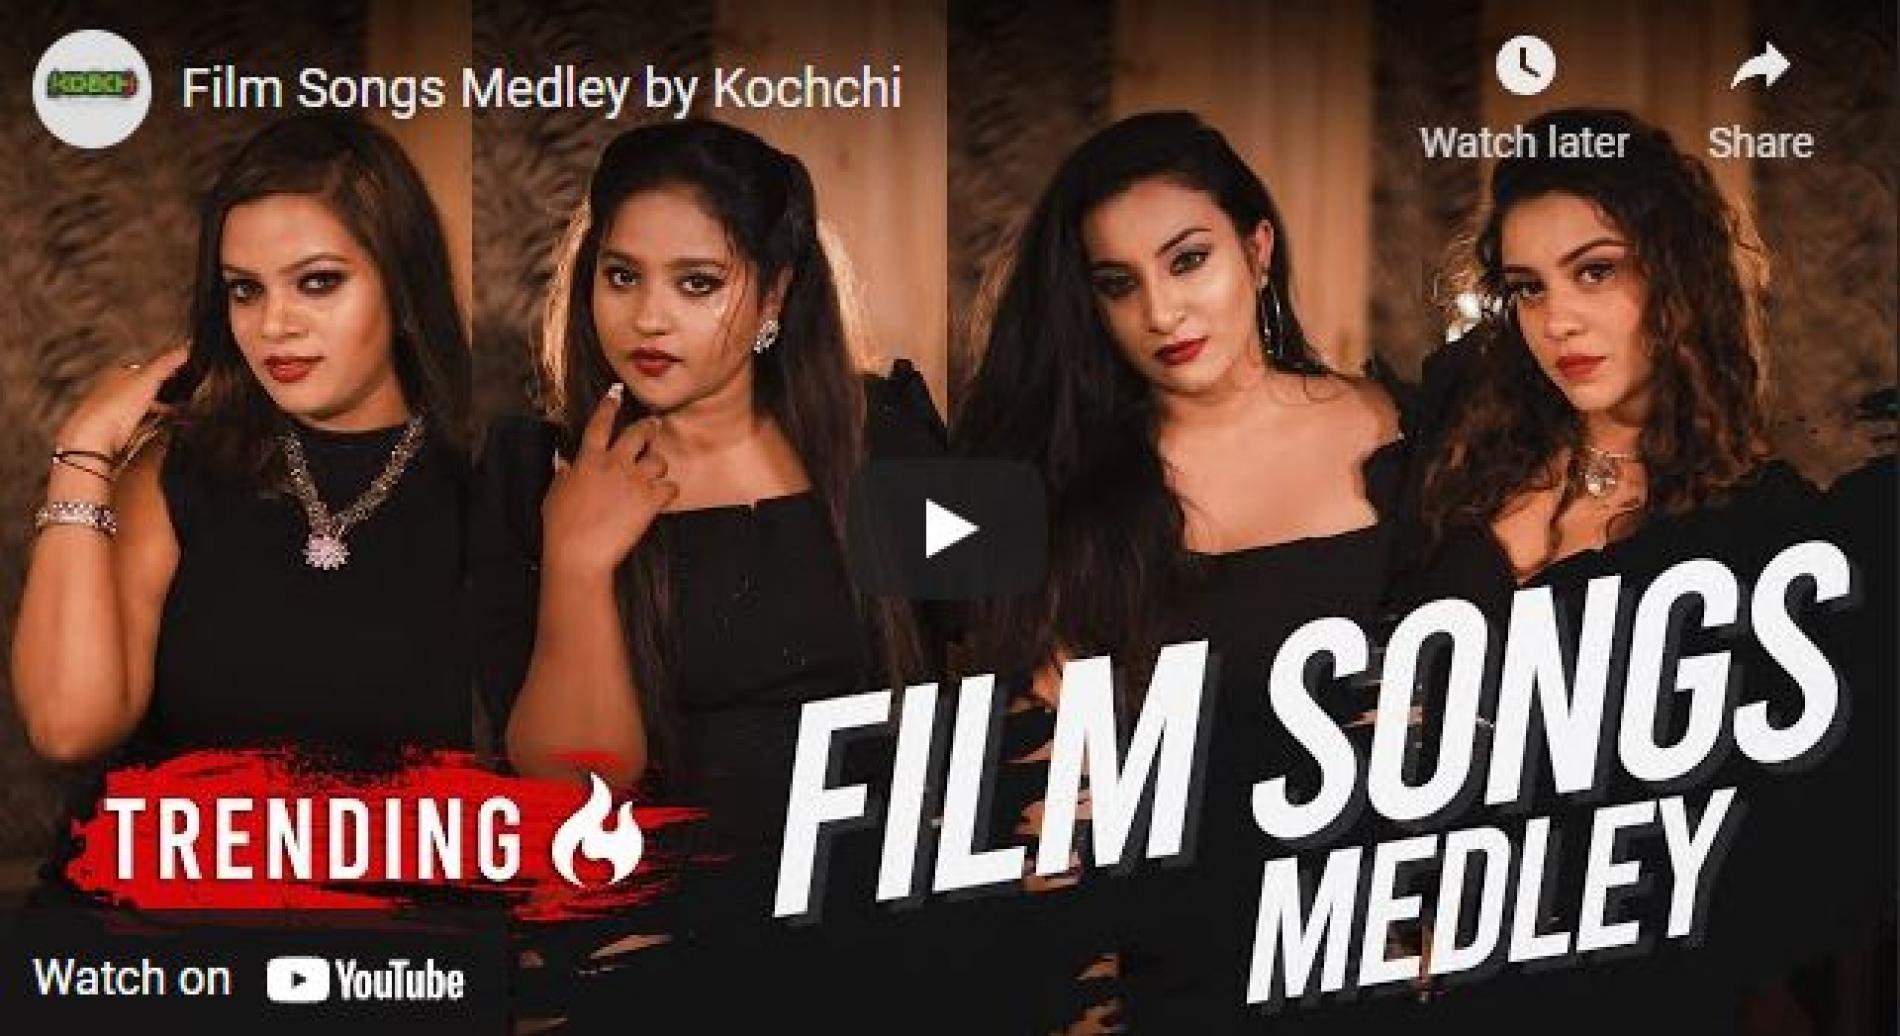 New Music : Film Songs Medley by Kochchi